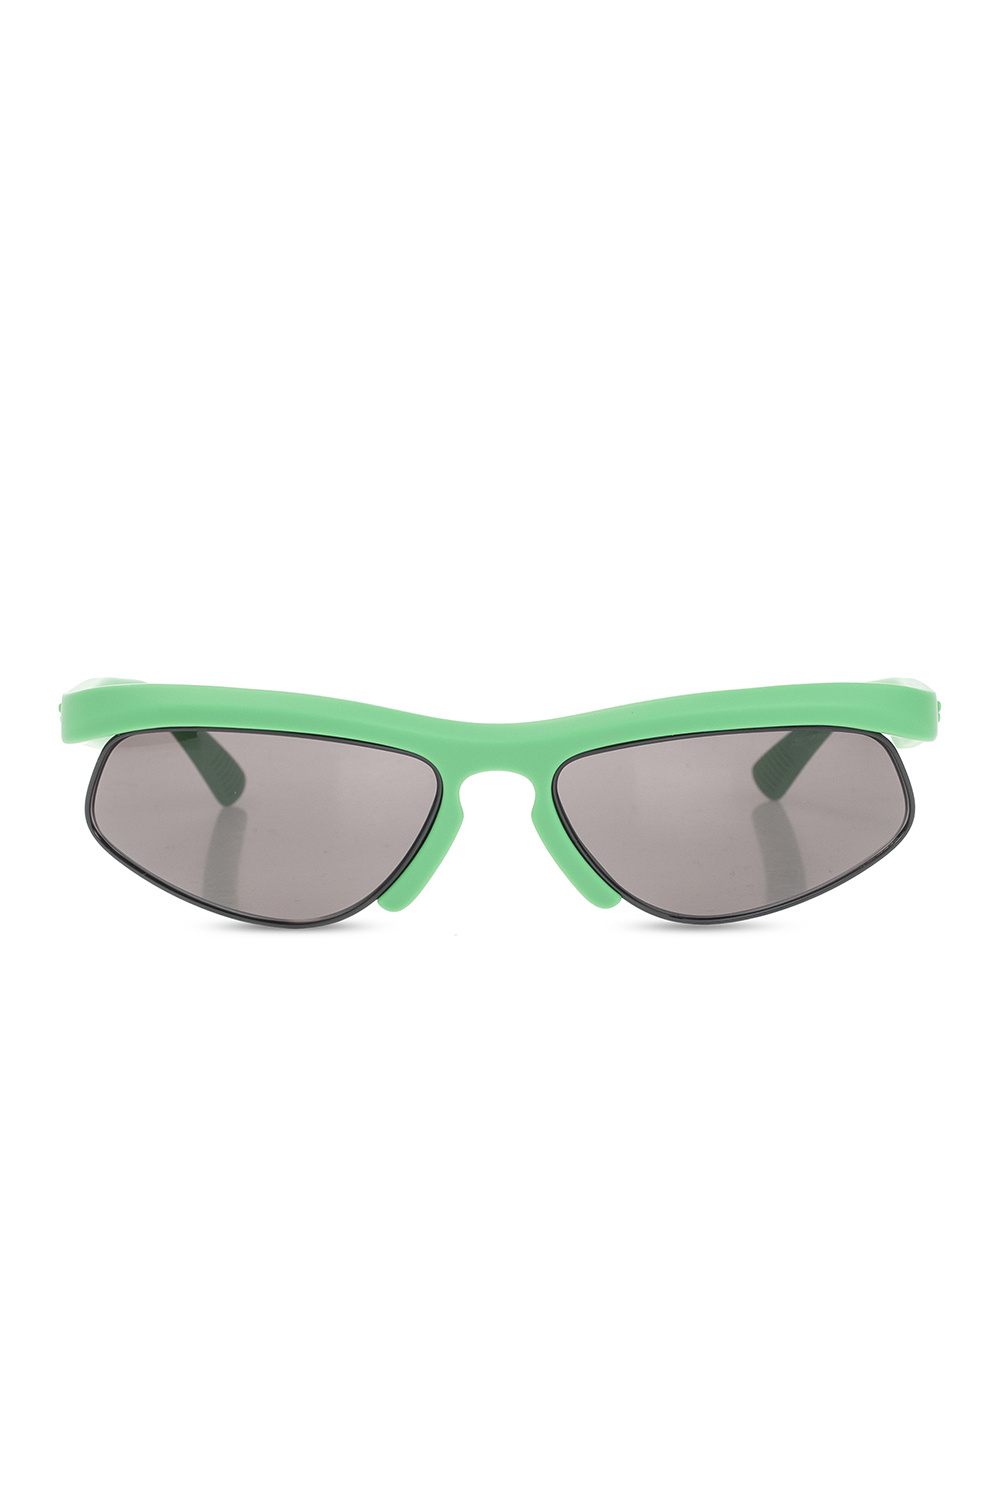 Bottega Veneta - Ski Goggles - Green - BV1167S-001 - Sunglasses - Limited  Exclusive Collection - Bottega Veneta Eyewear - Avvenice